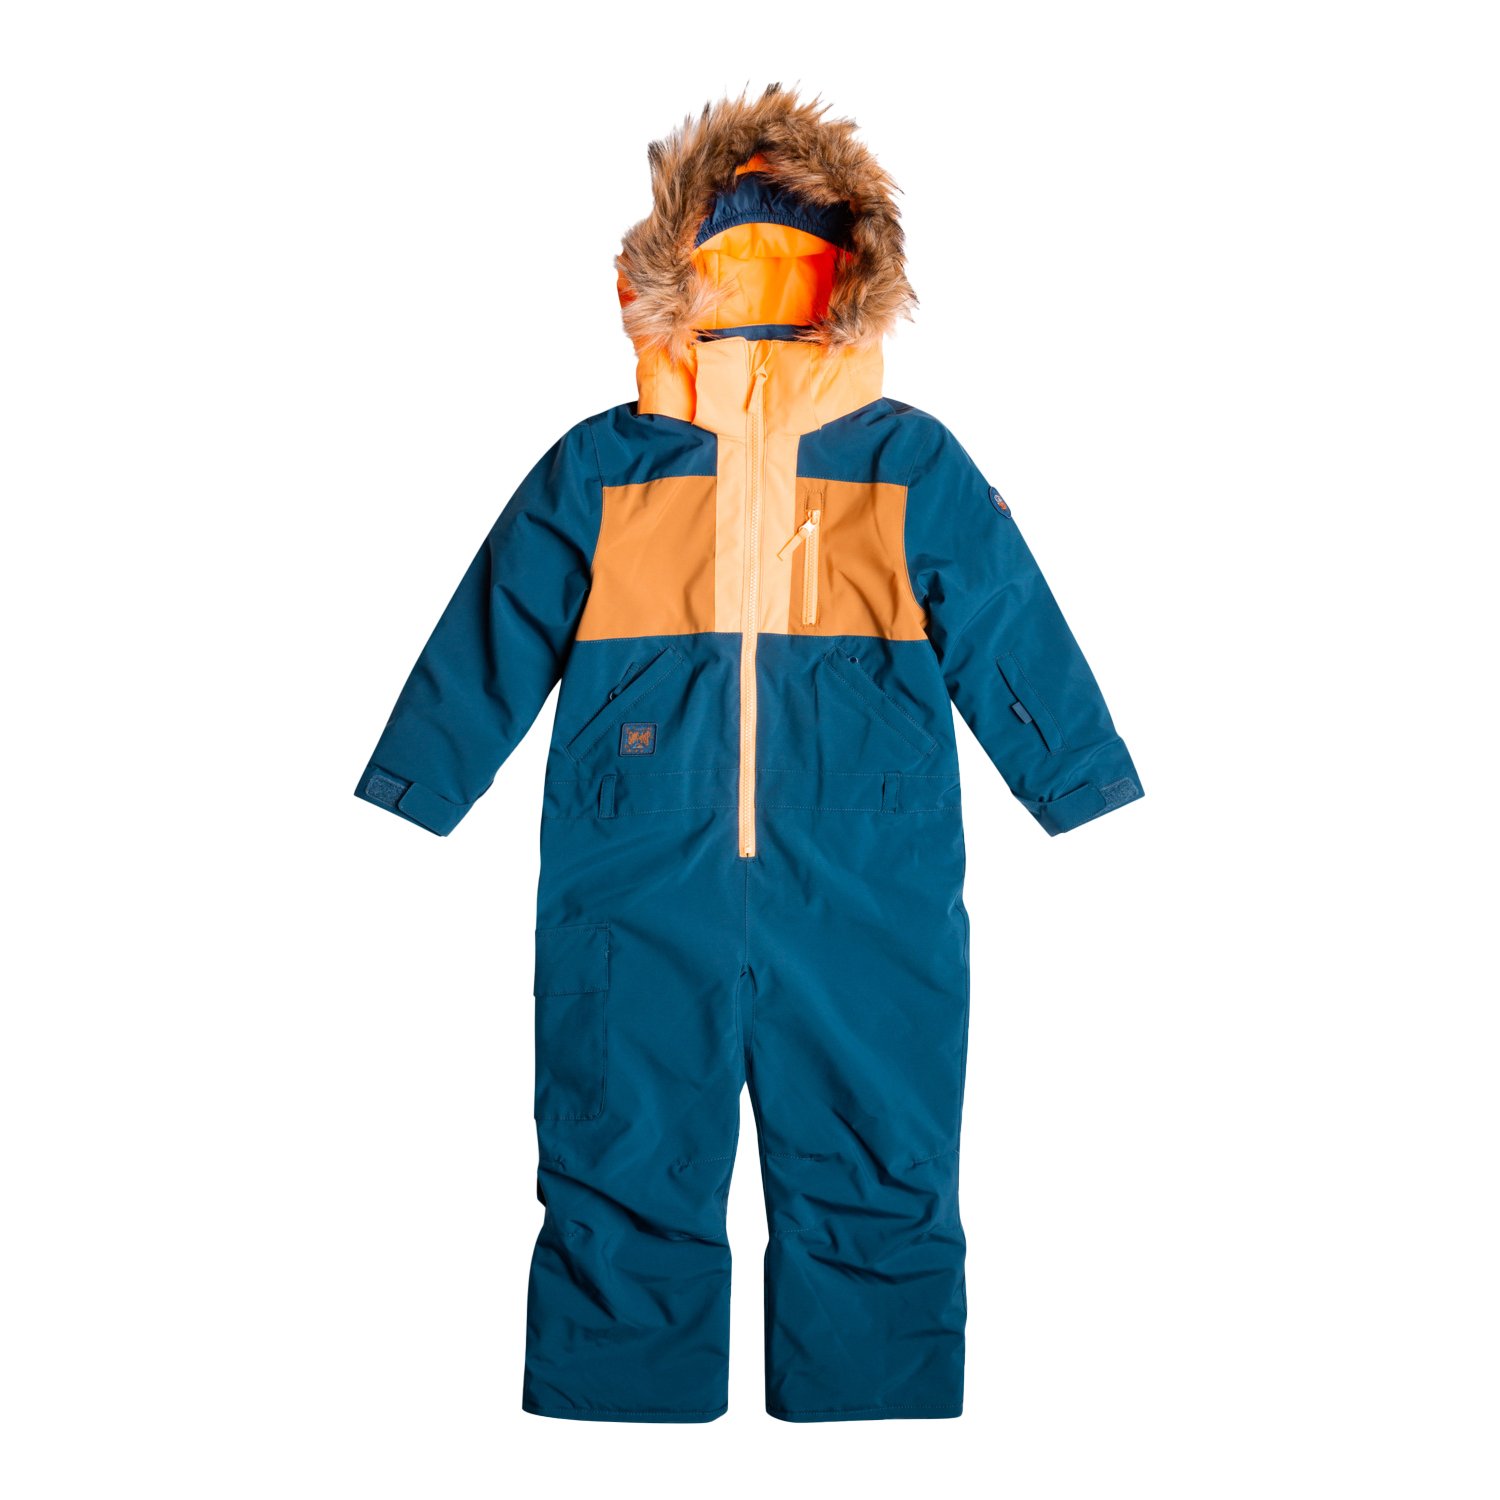 Quiksilver Rookie Suit Çocuk Kayak/Snowboard Tulumu - Mavi - 1